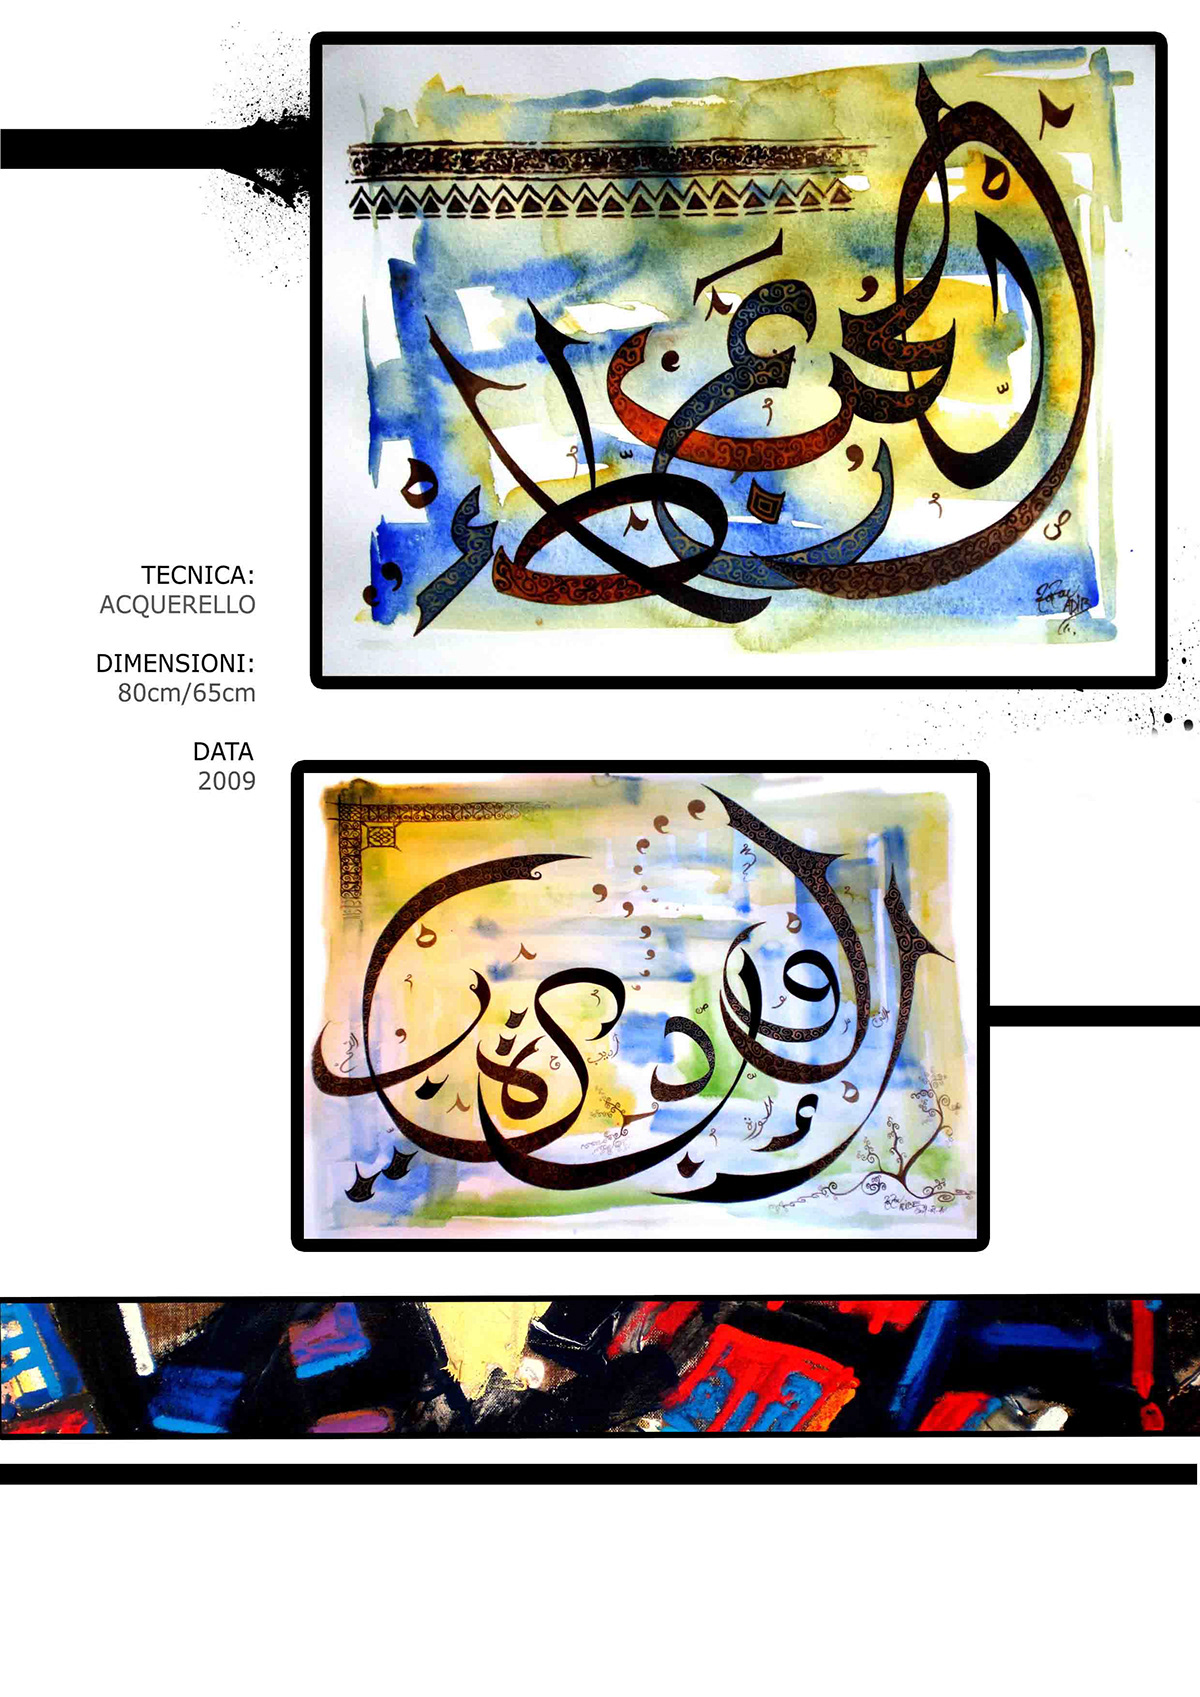 arts innovation Morocco Arab arabic Moroccan oriental